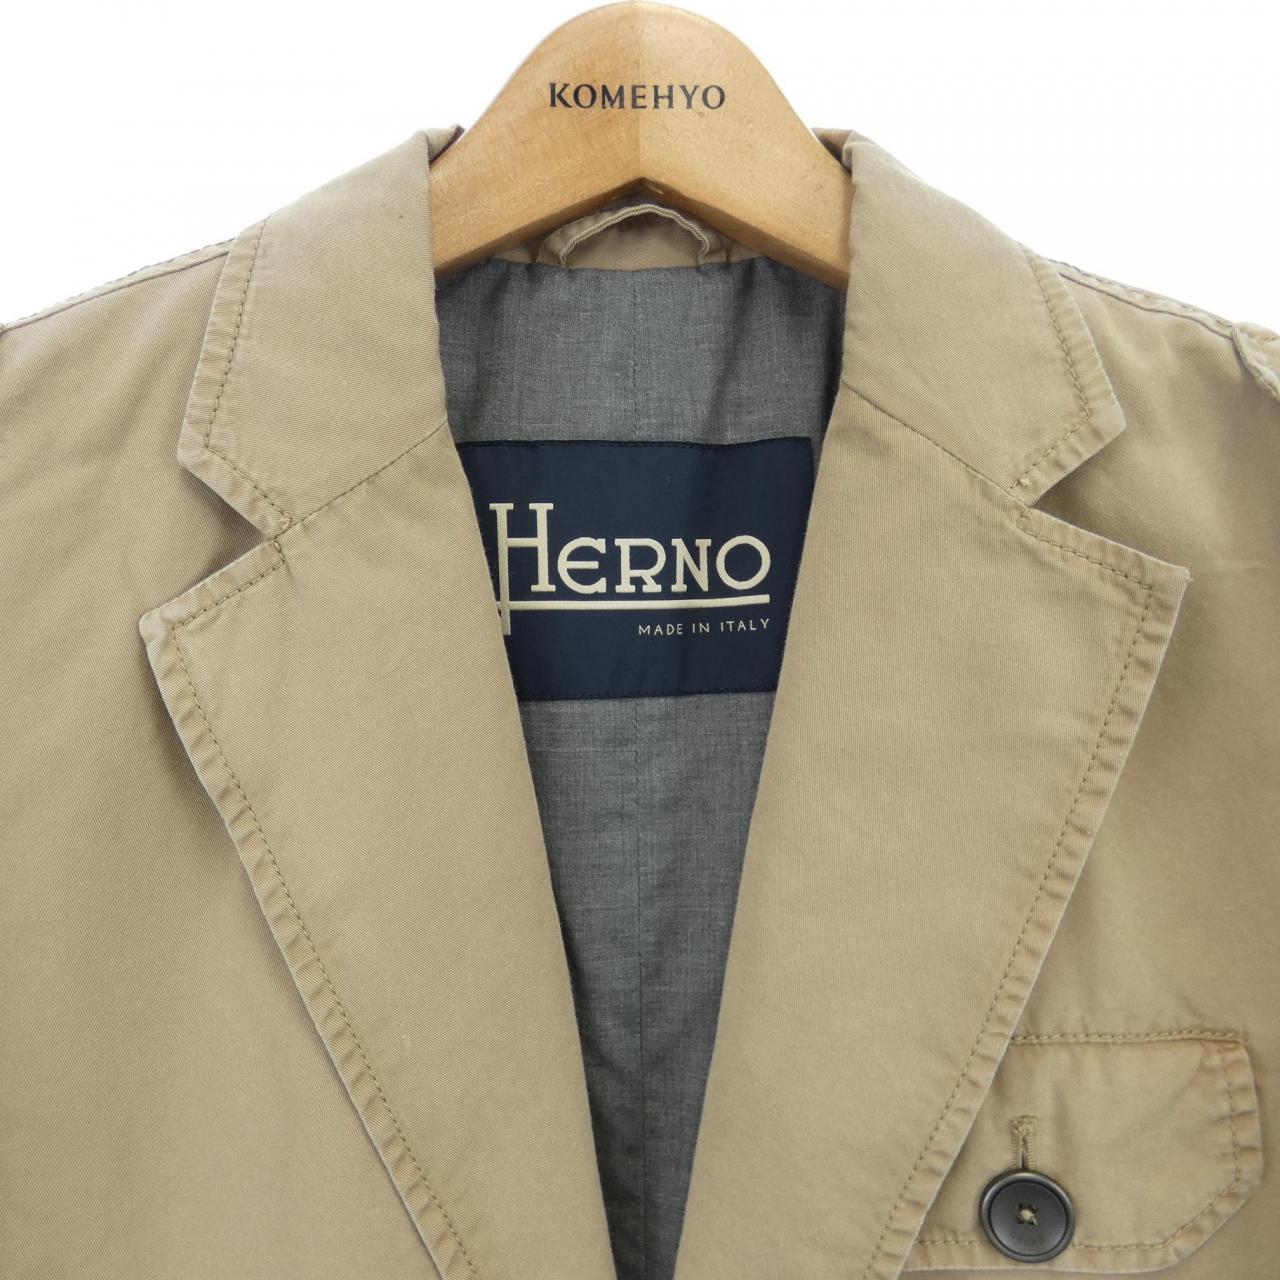 Herno jacket